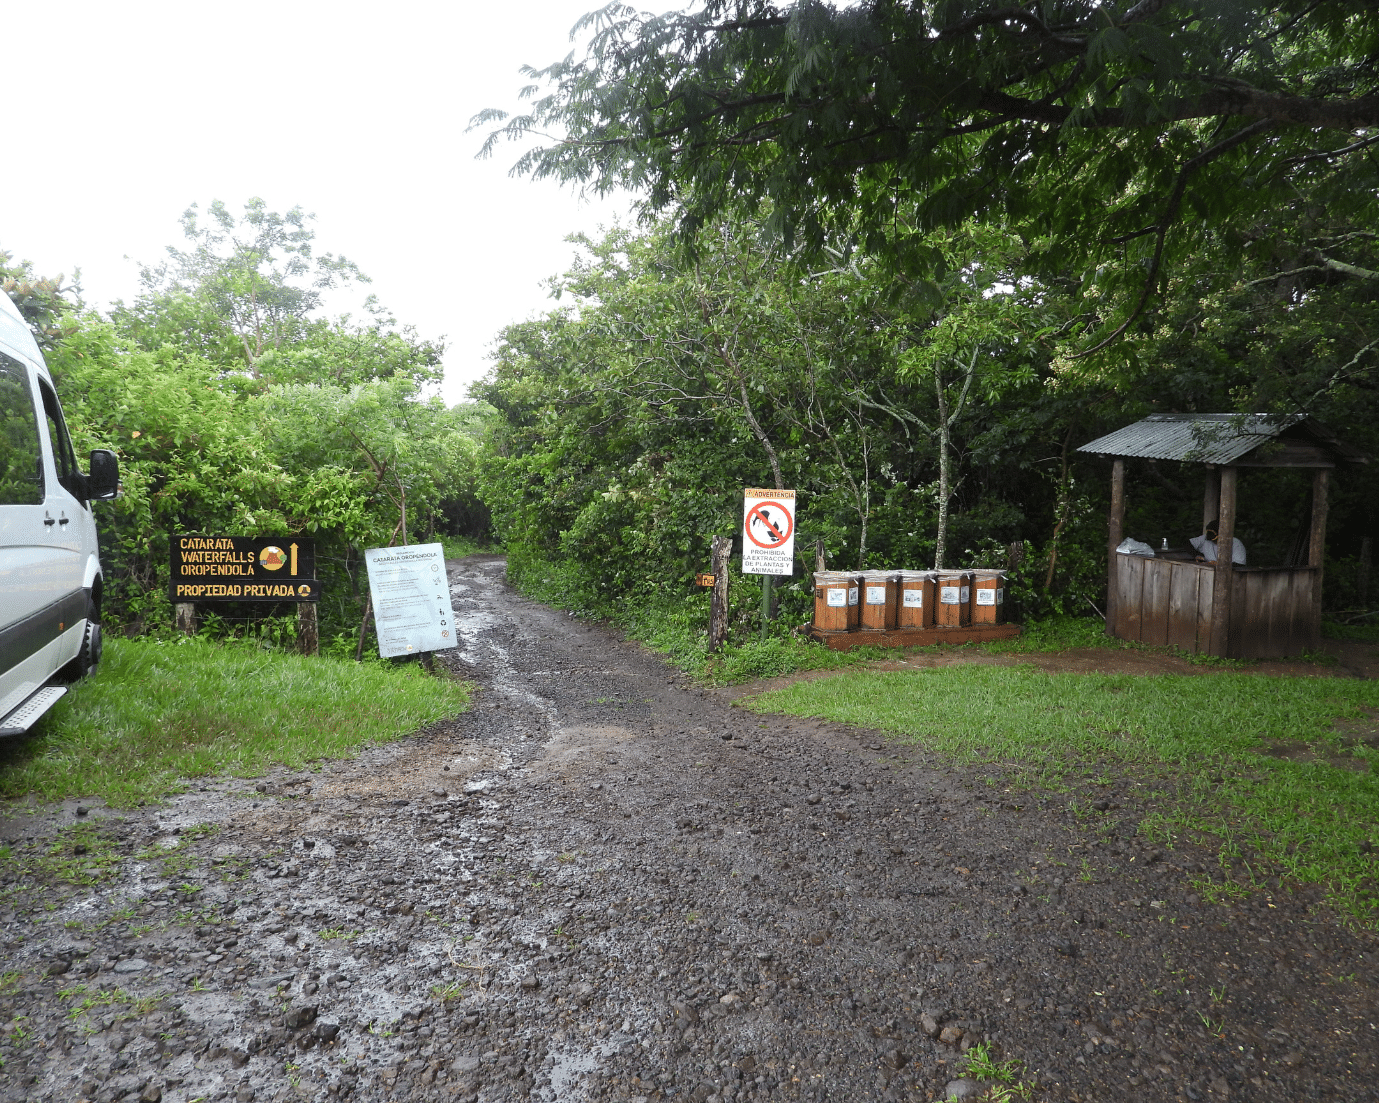 Entrance to Oropendola Waterfall